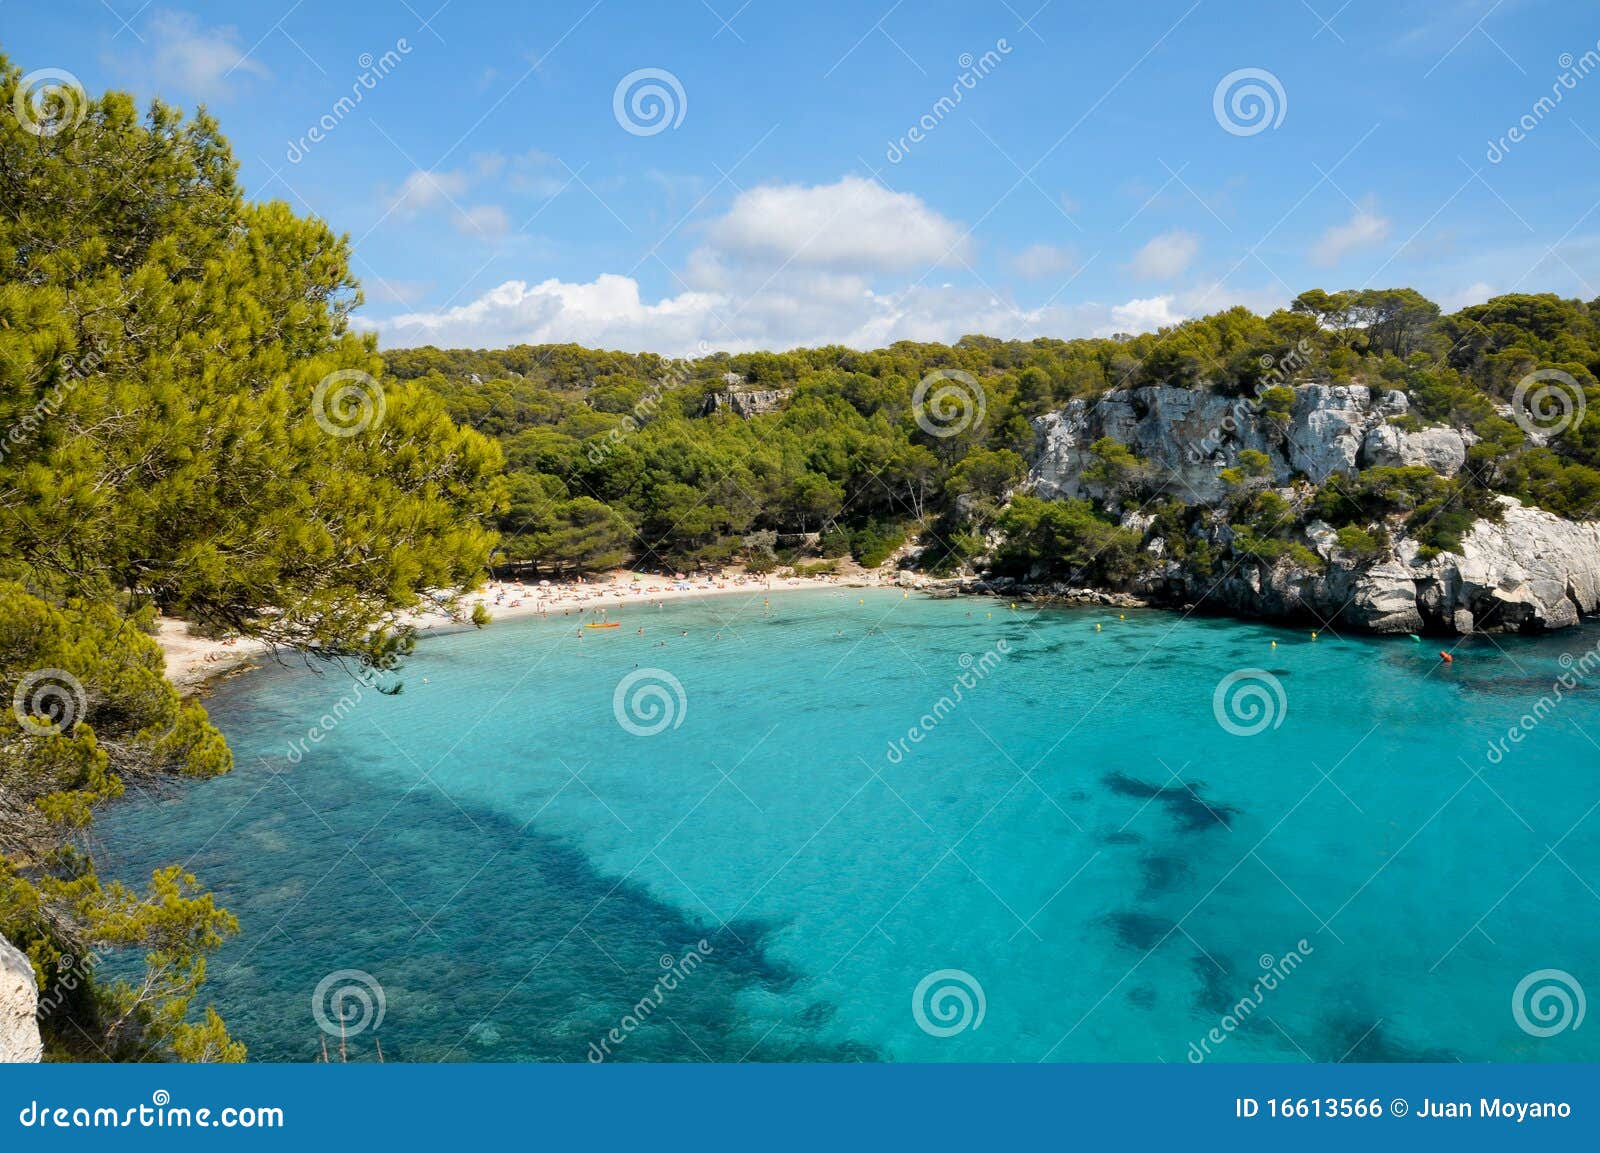 macarella beach in menorca balearic islands, spain